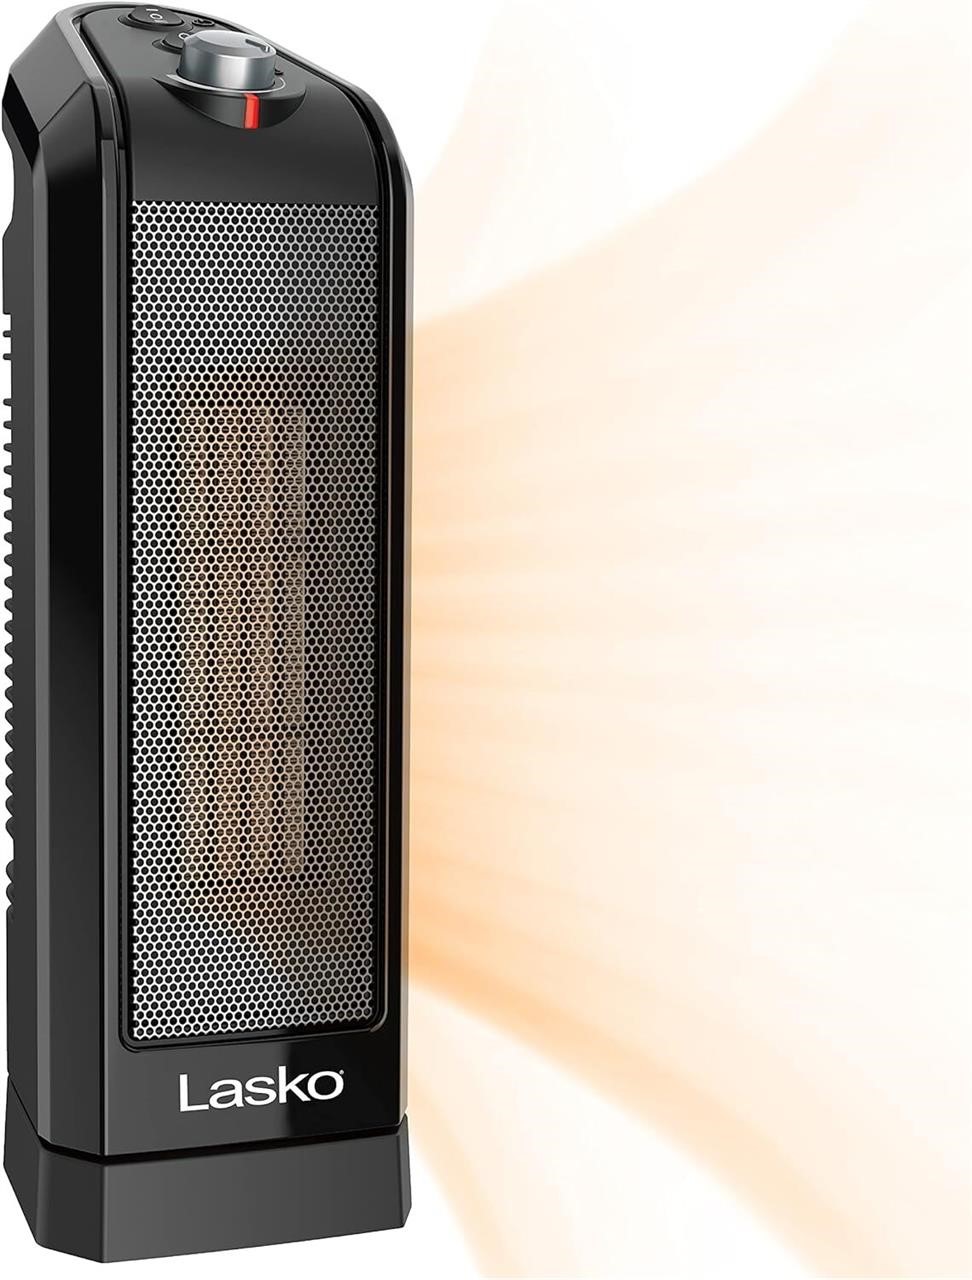 Lasko Ceramic Space Heater  15.7 Inches  4lbs